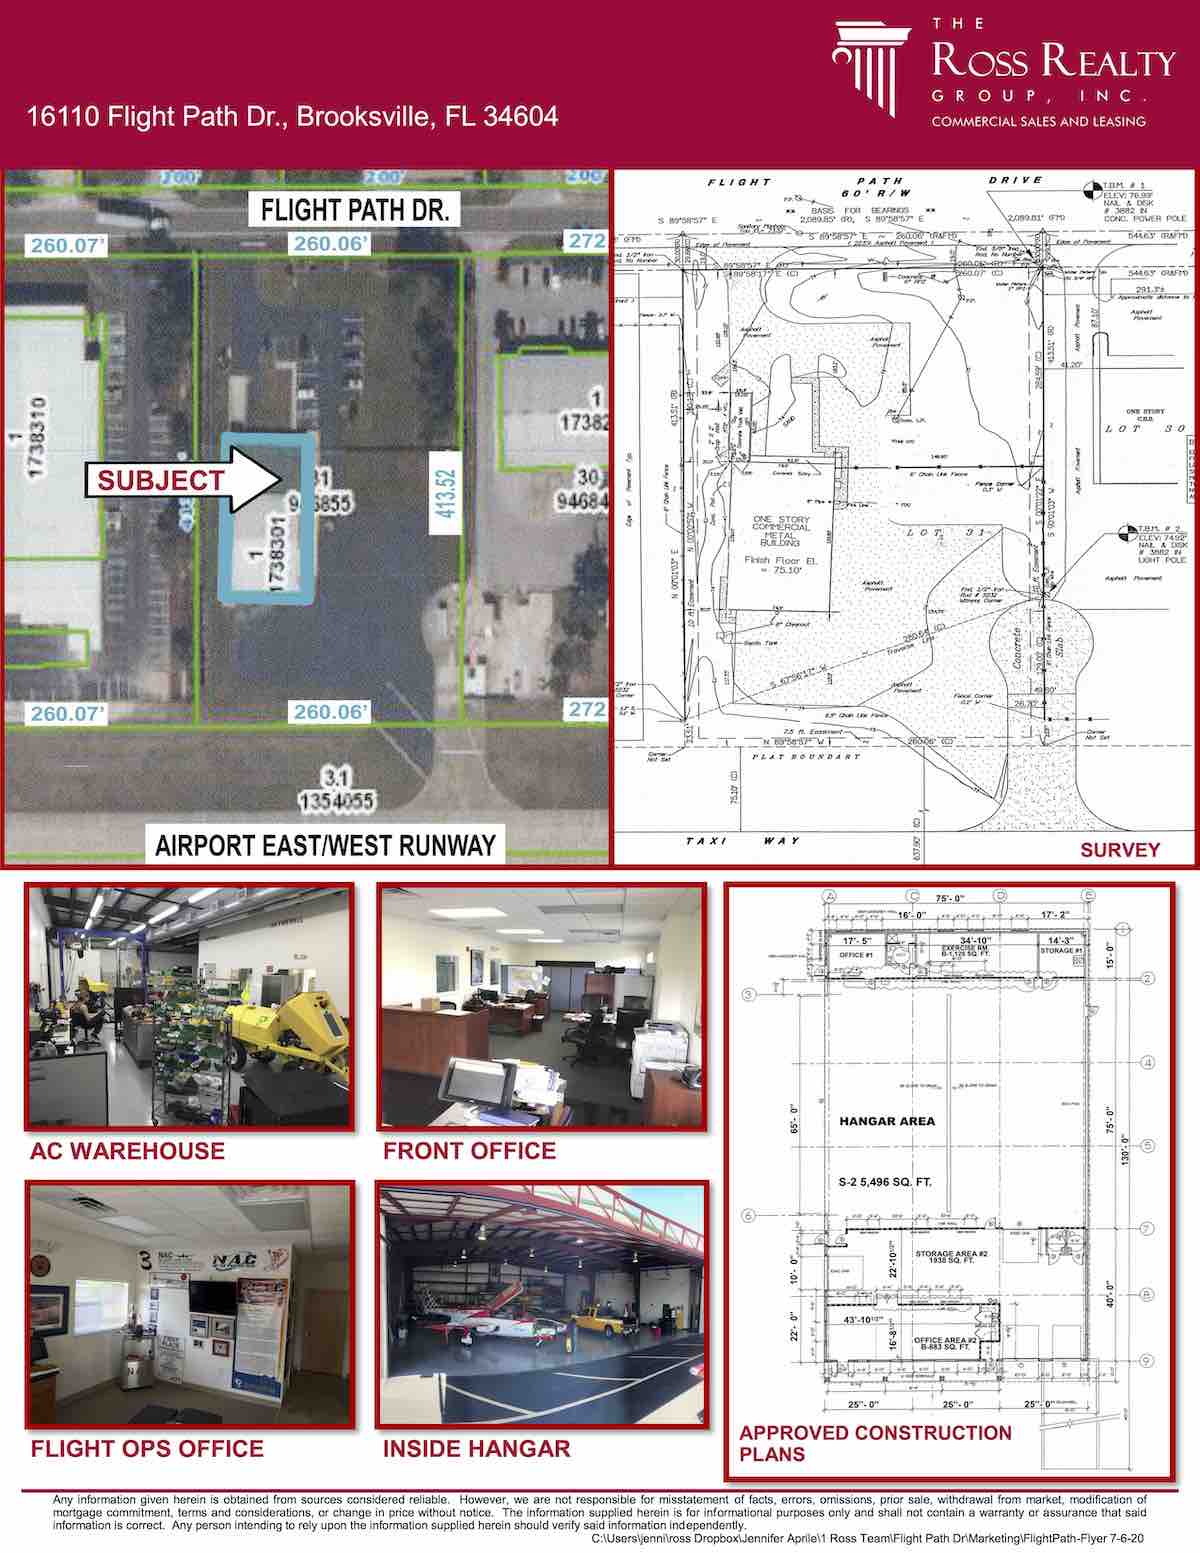 Tampa Commercial Real Estate - FOR SALE - Hangar - Office Building - 16110 Flight Path Dr., Brooksville, FL 34604 P2